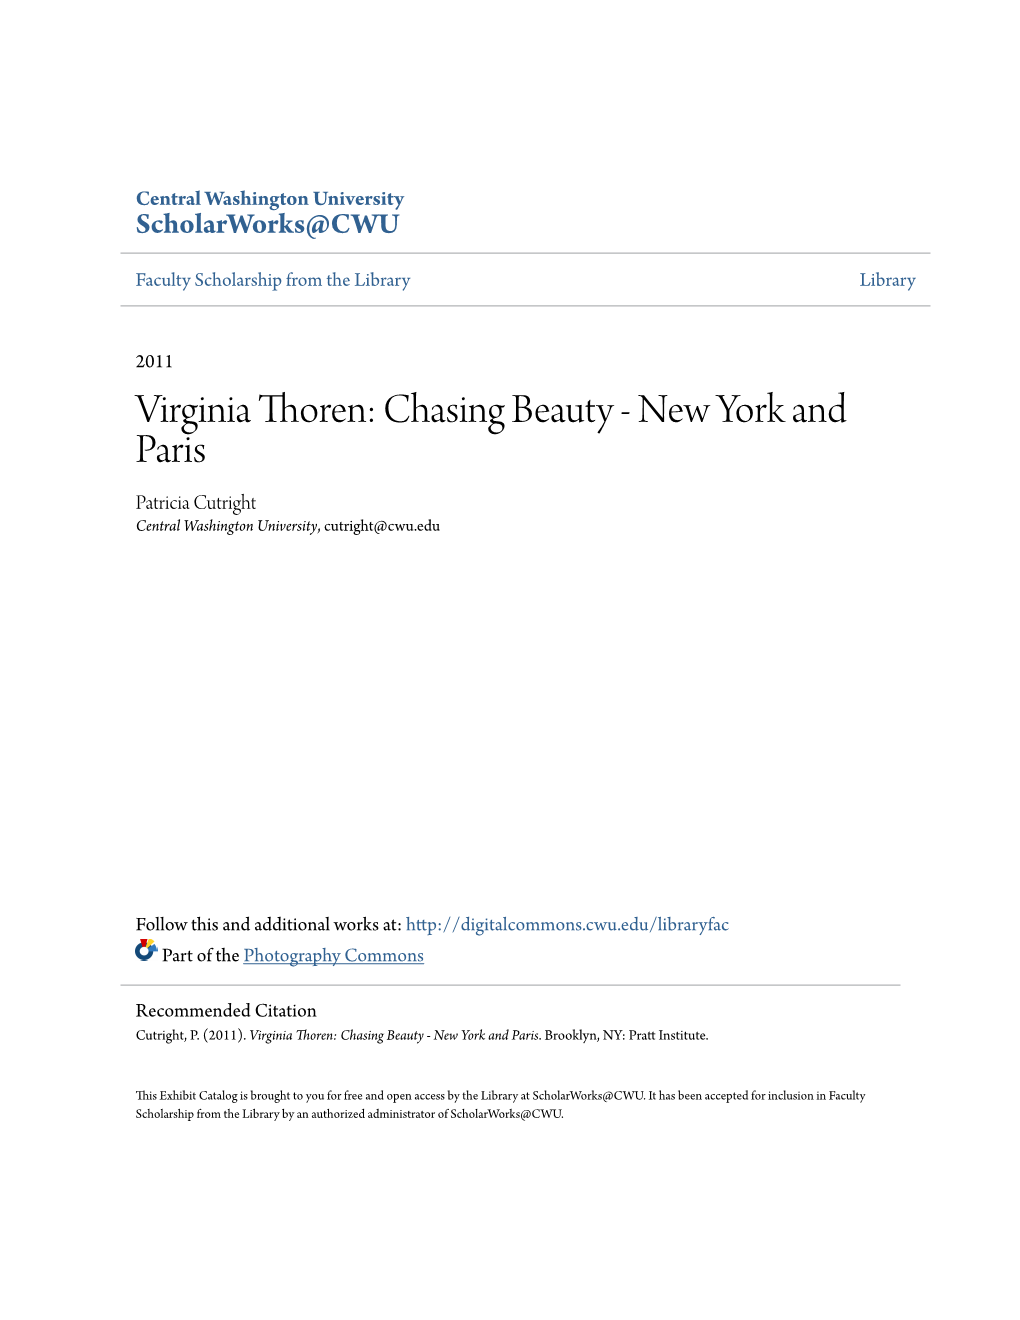 Virginia Thoren: Chasing Beauty - New York and Paris Patricia Cutright Central Washington University, Cutright@Cwu.Edu